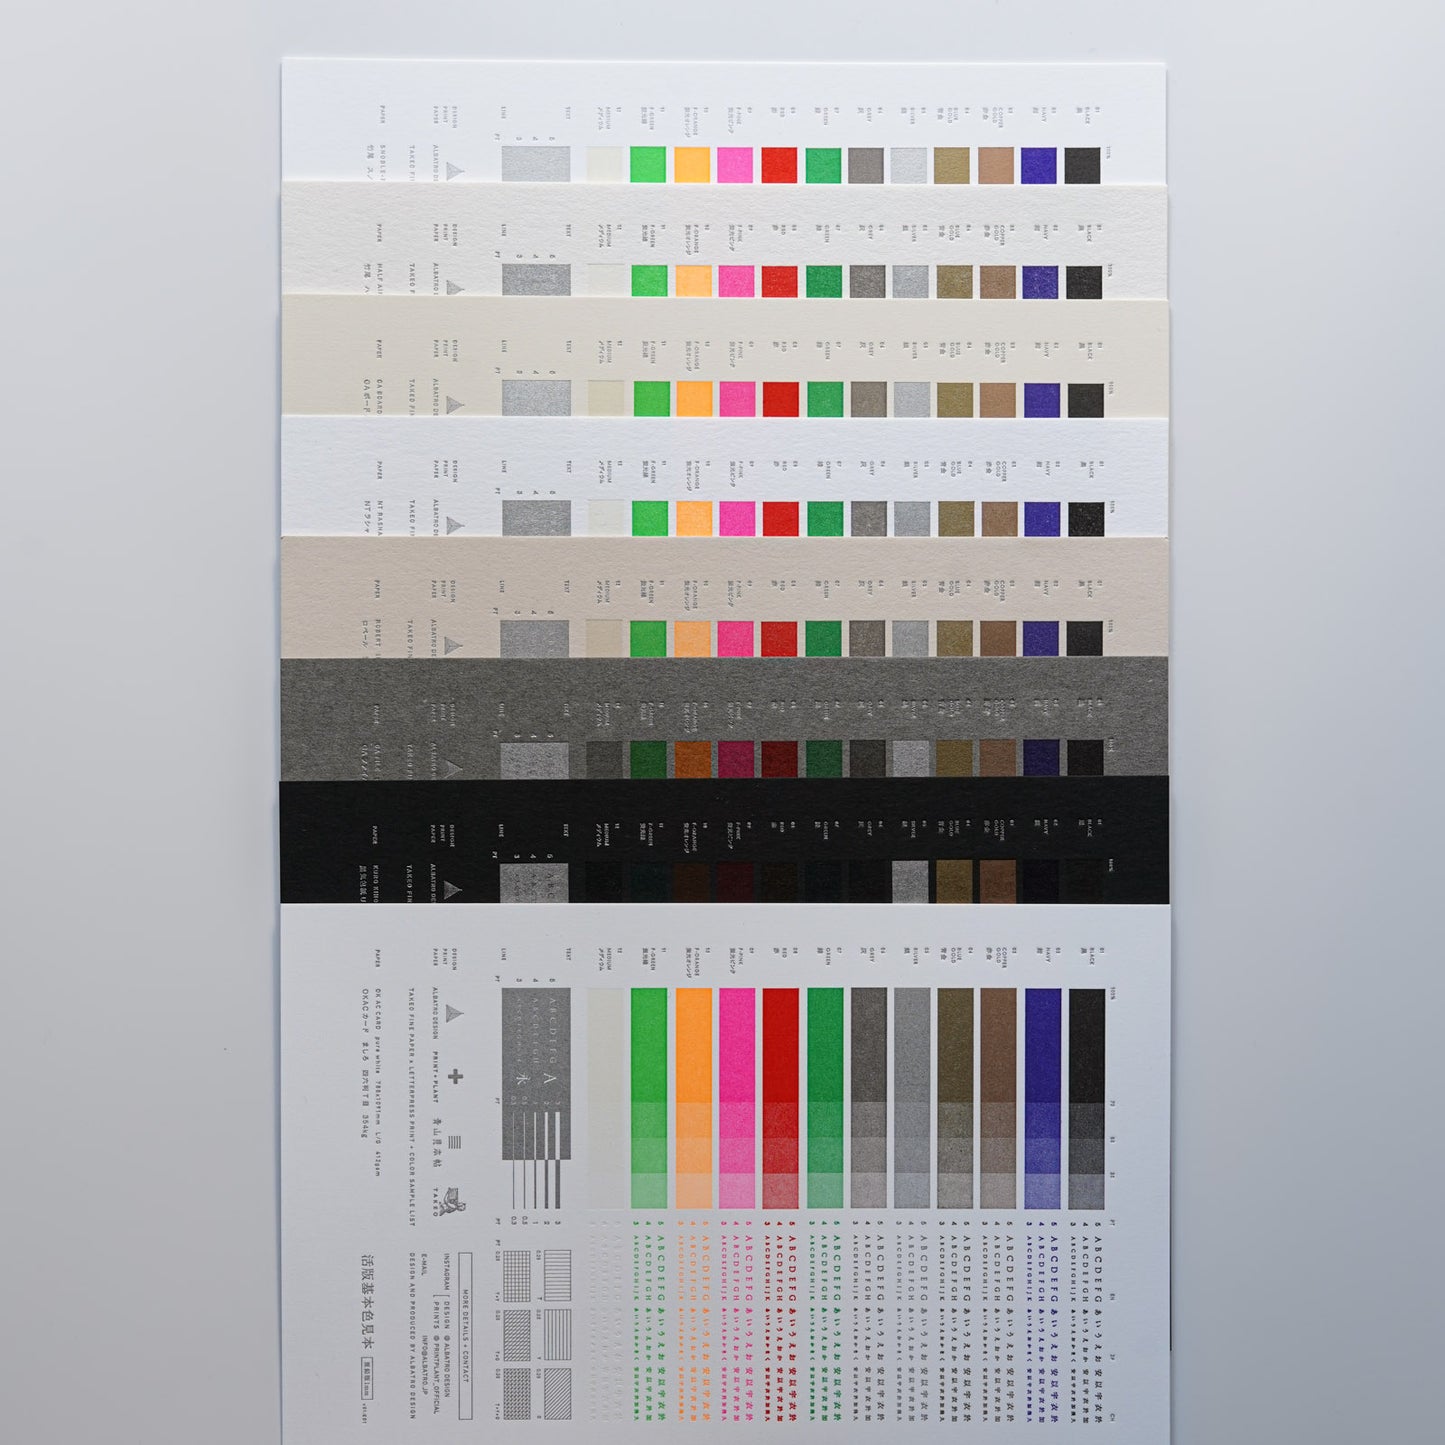 活版基本色見本 Letterpress Color Sample